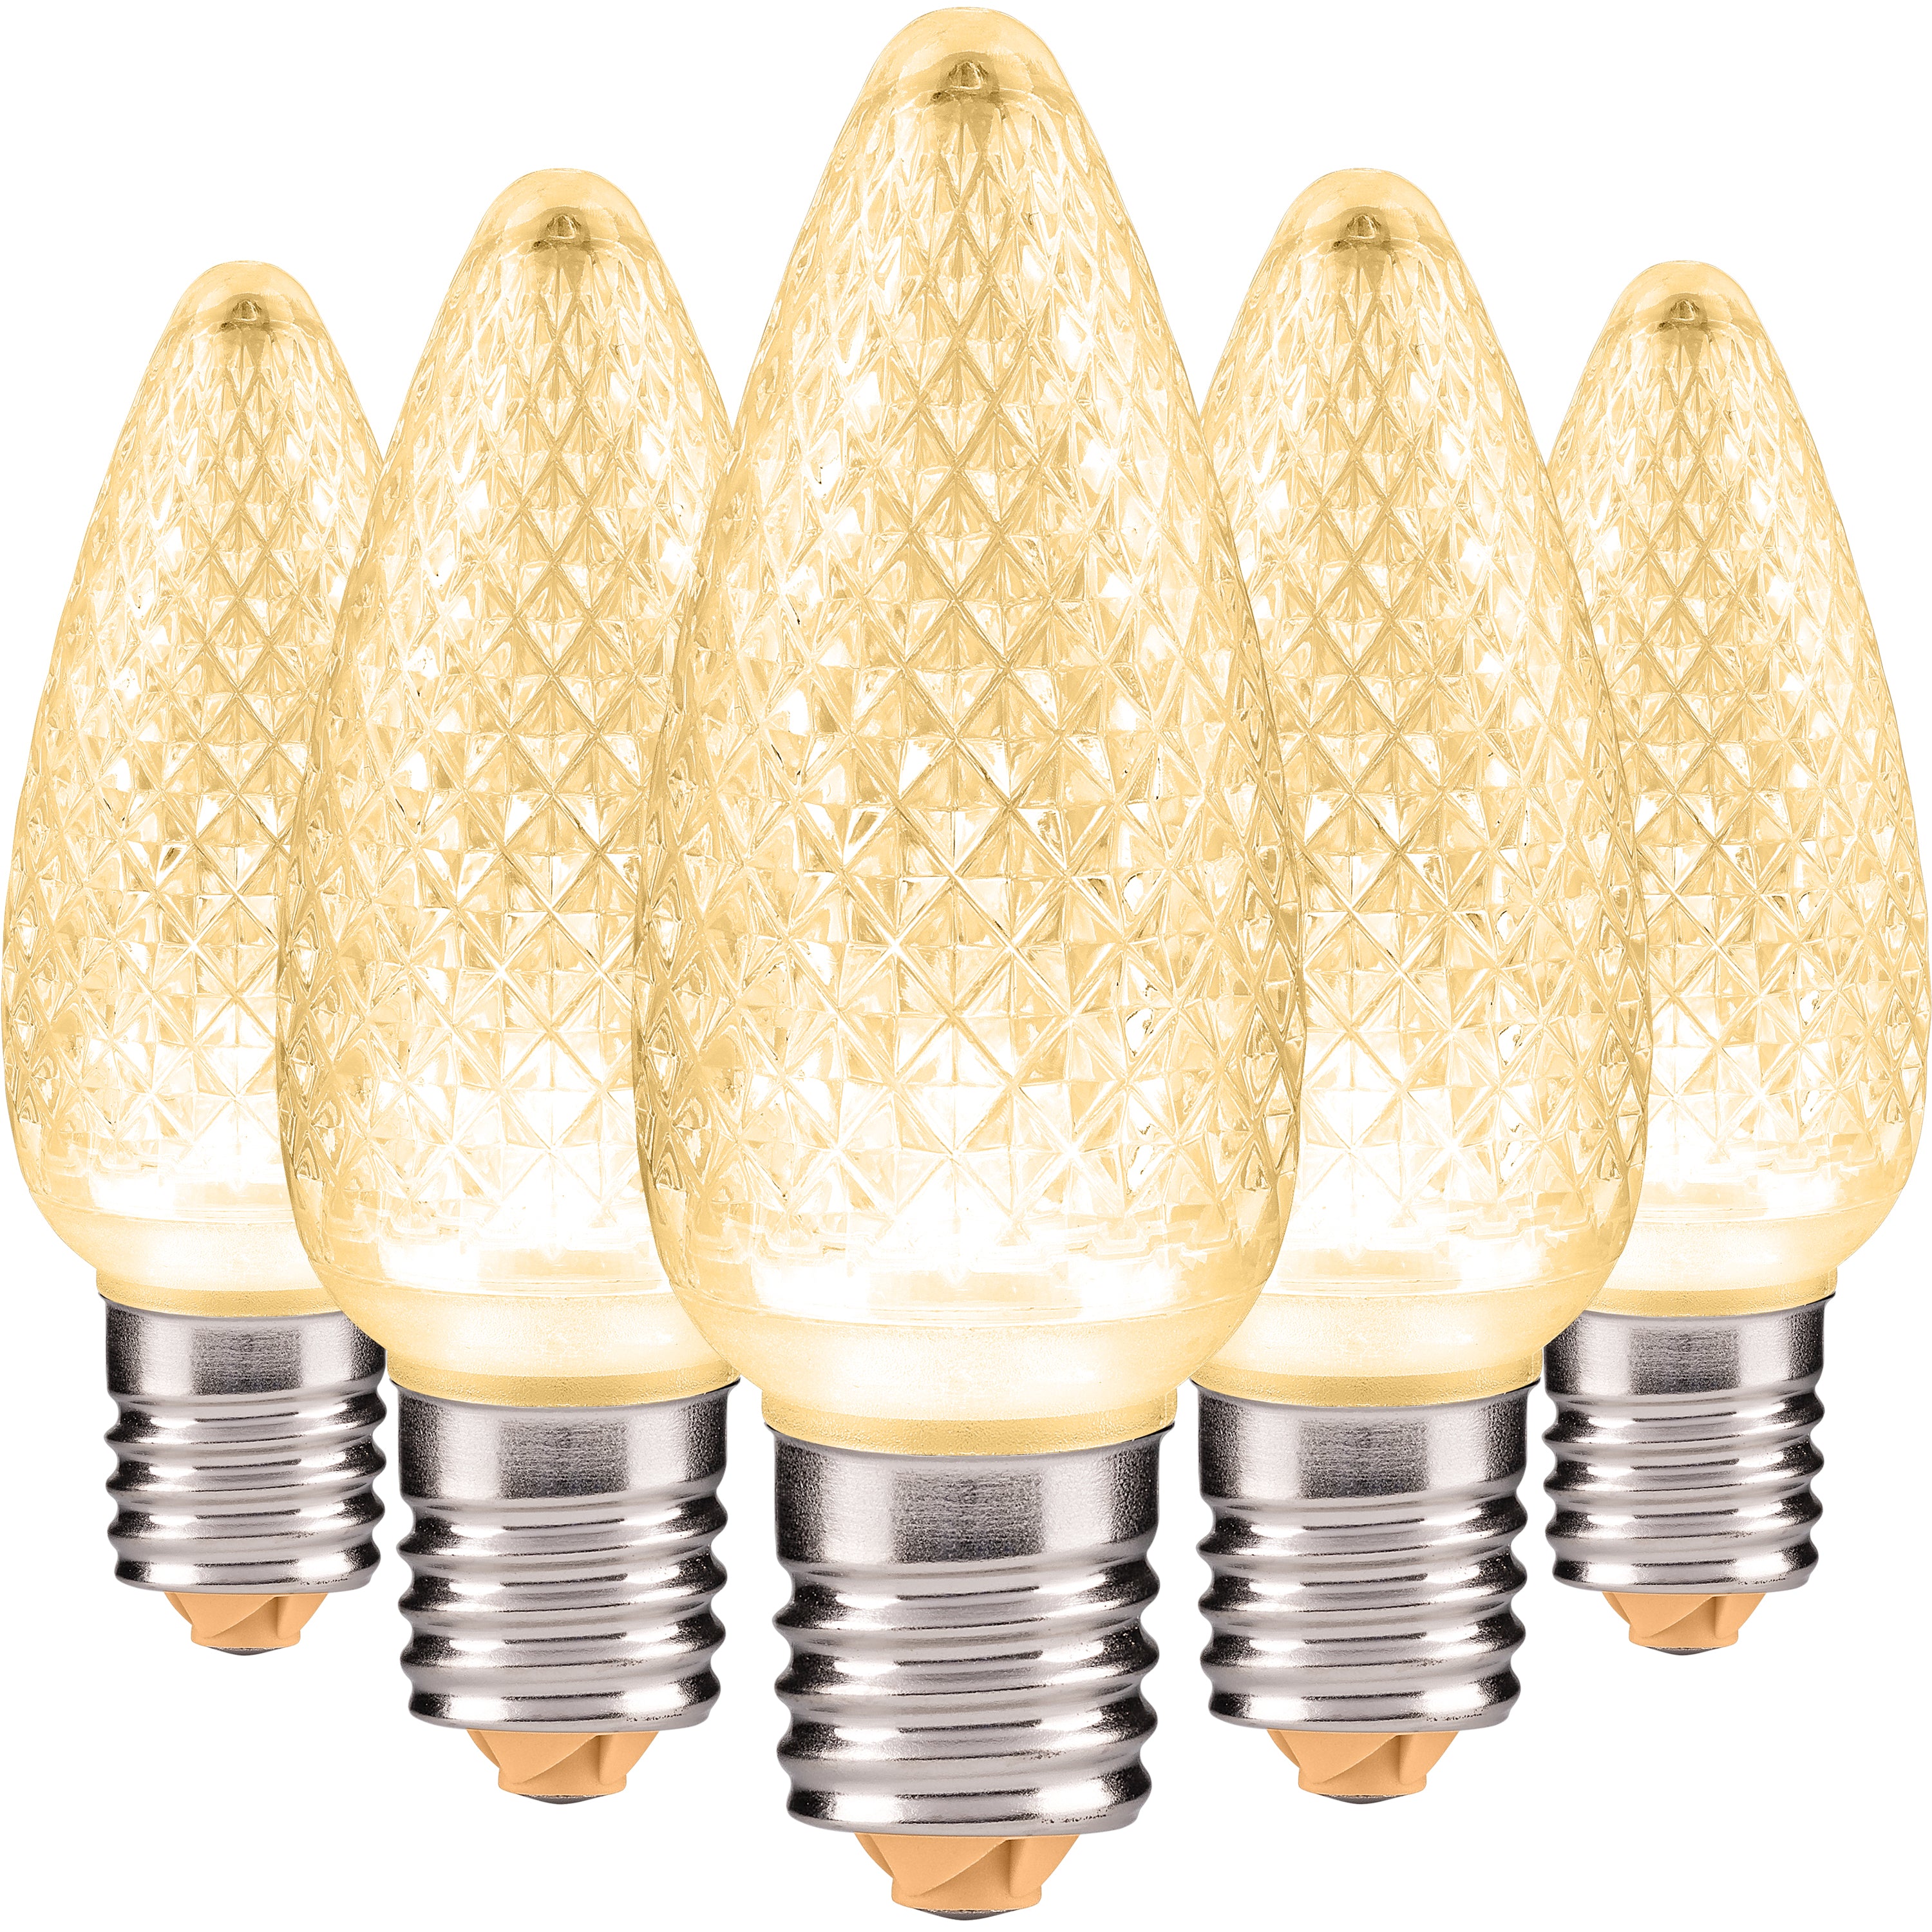 C9 LED Christmas Light Bulbs | Faceted